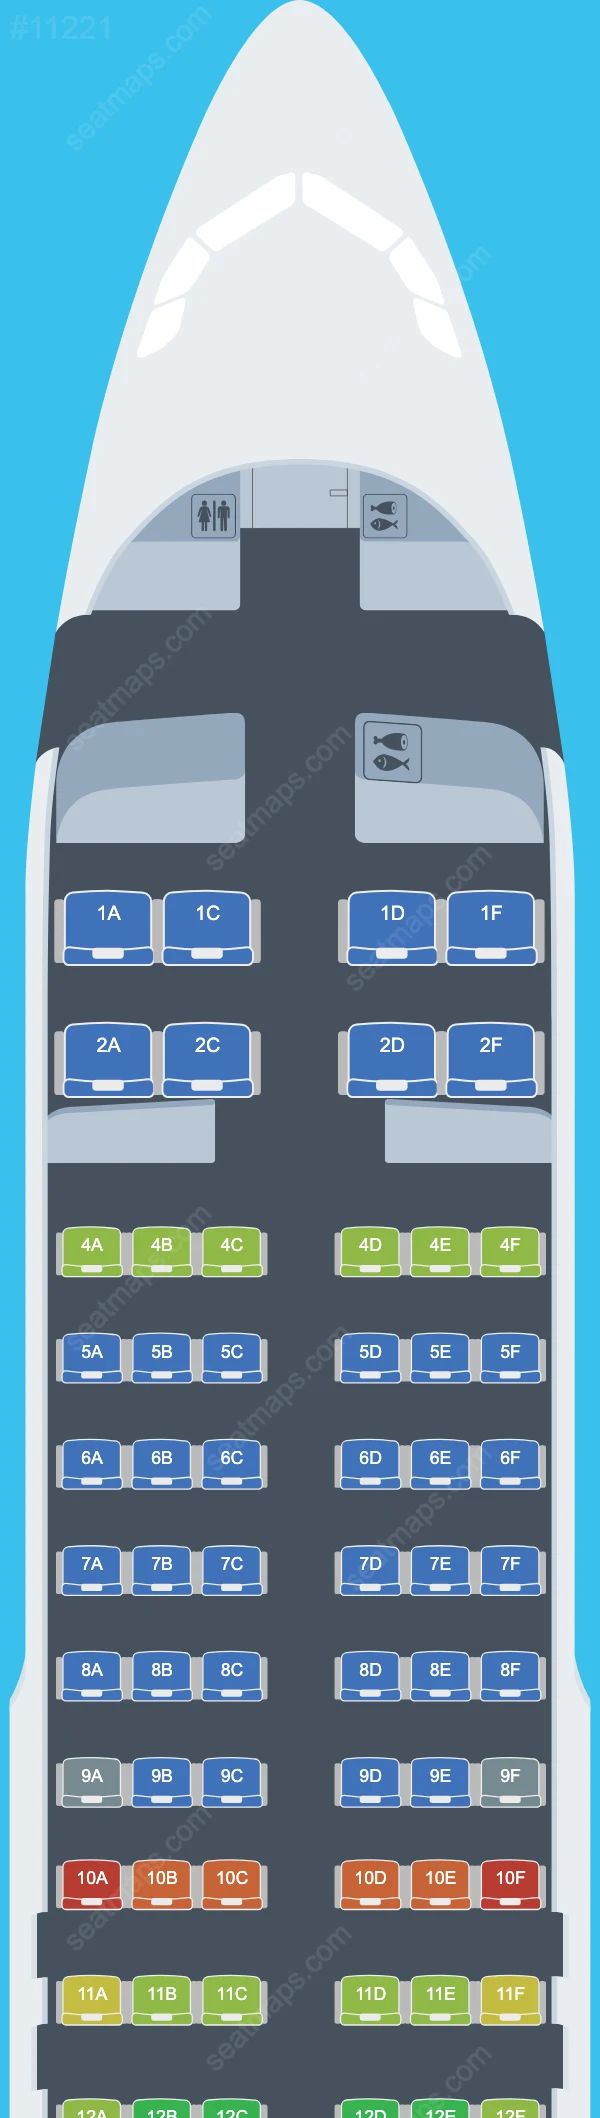 Batik Air Airbus A320-200 seatmap mobile preview